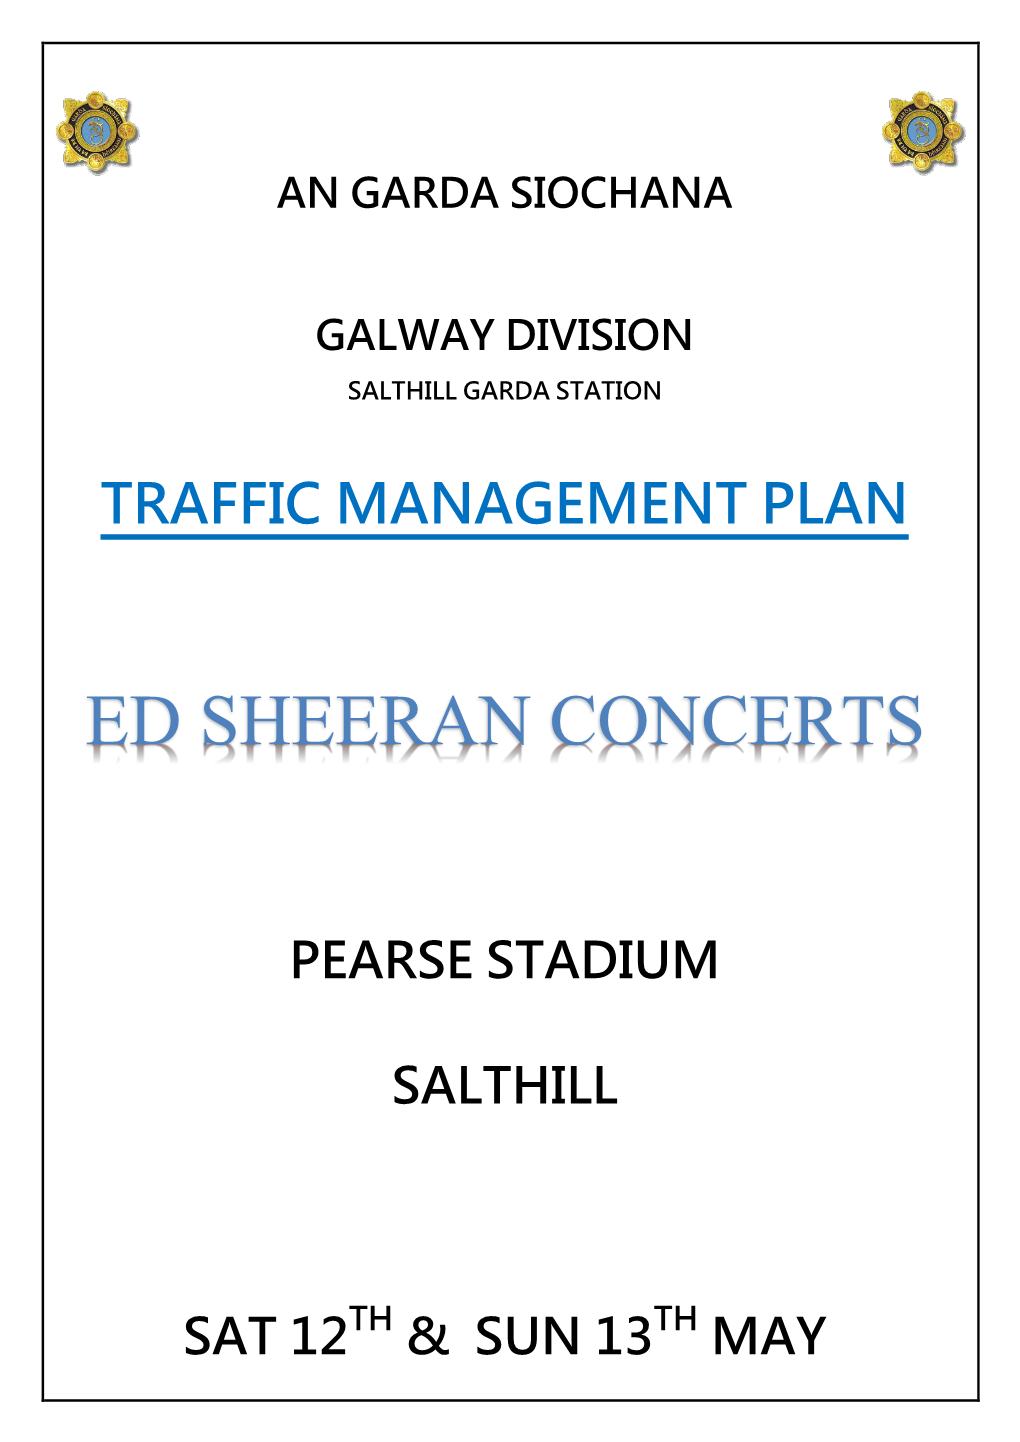 Ed Sheeran Concerts